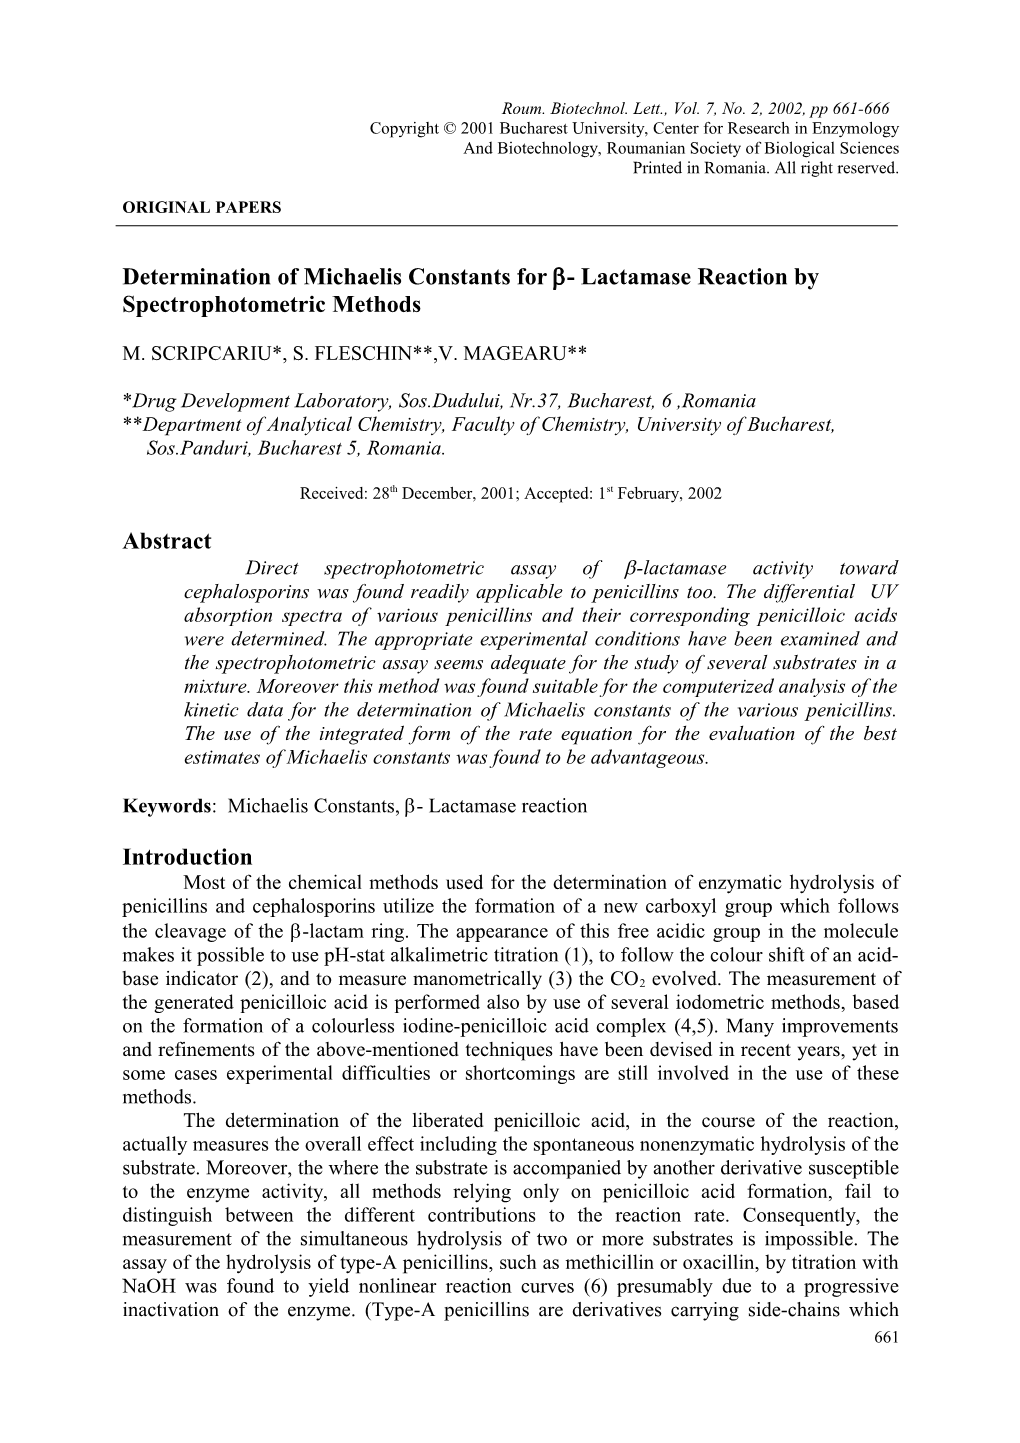 Determination of Michaelis Constants for - Lactamase Reaction by Spectrophotometric Methods